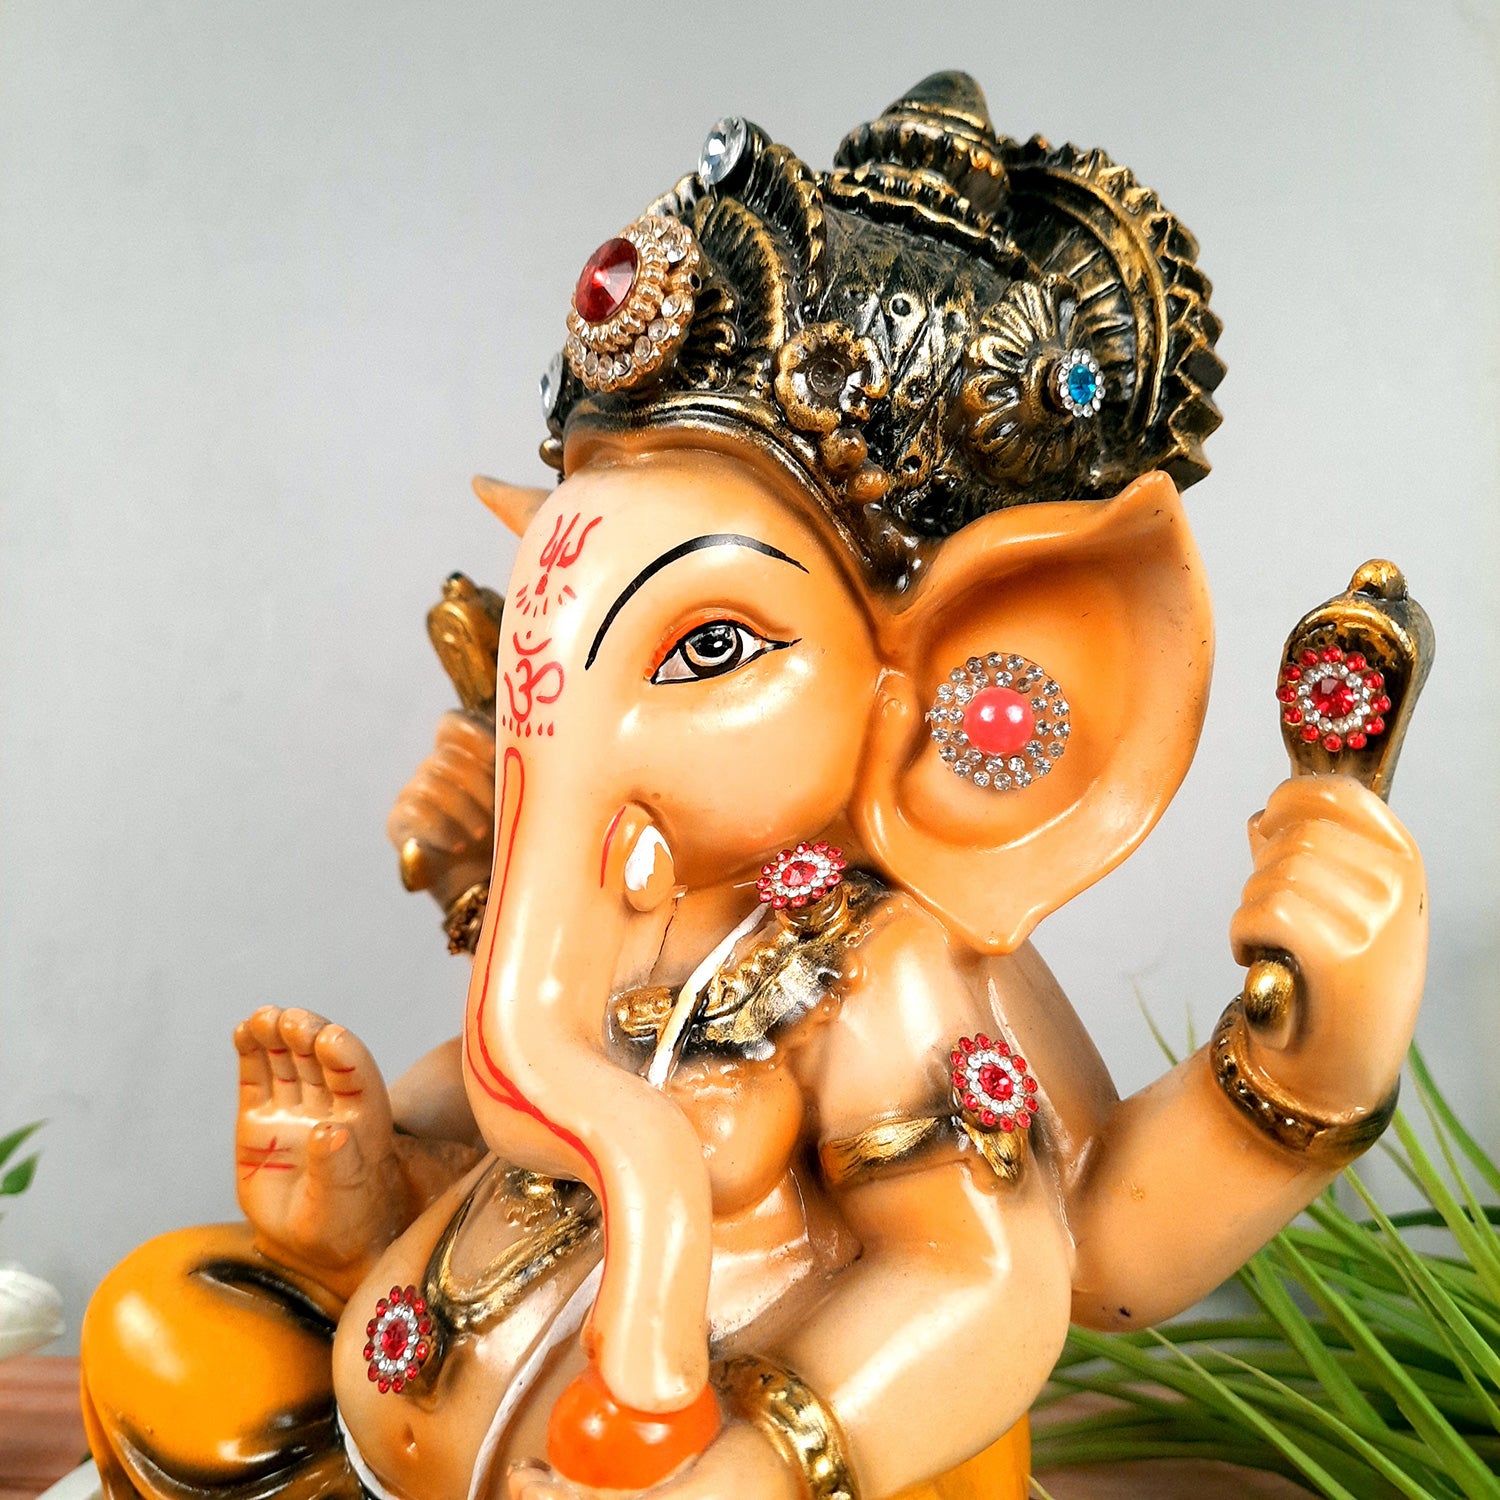 Ganesh Idol | Lord Ganesha Statue Murti - For Puja, Home & Entrance Living Room Decor & Gift - 11 Inch - Apkamart